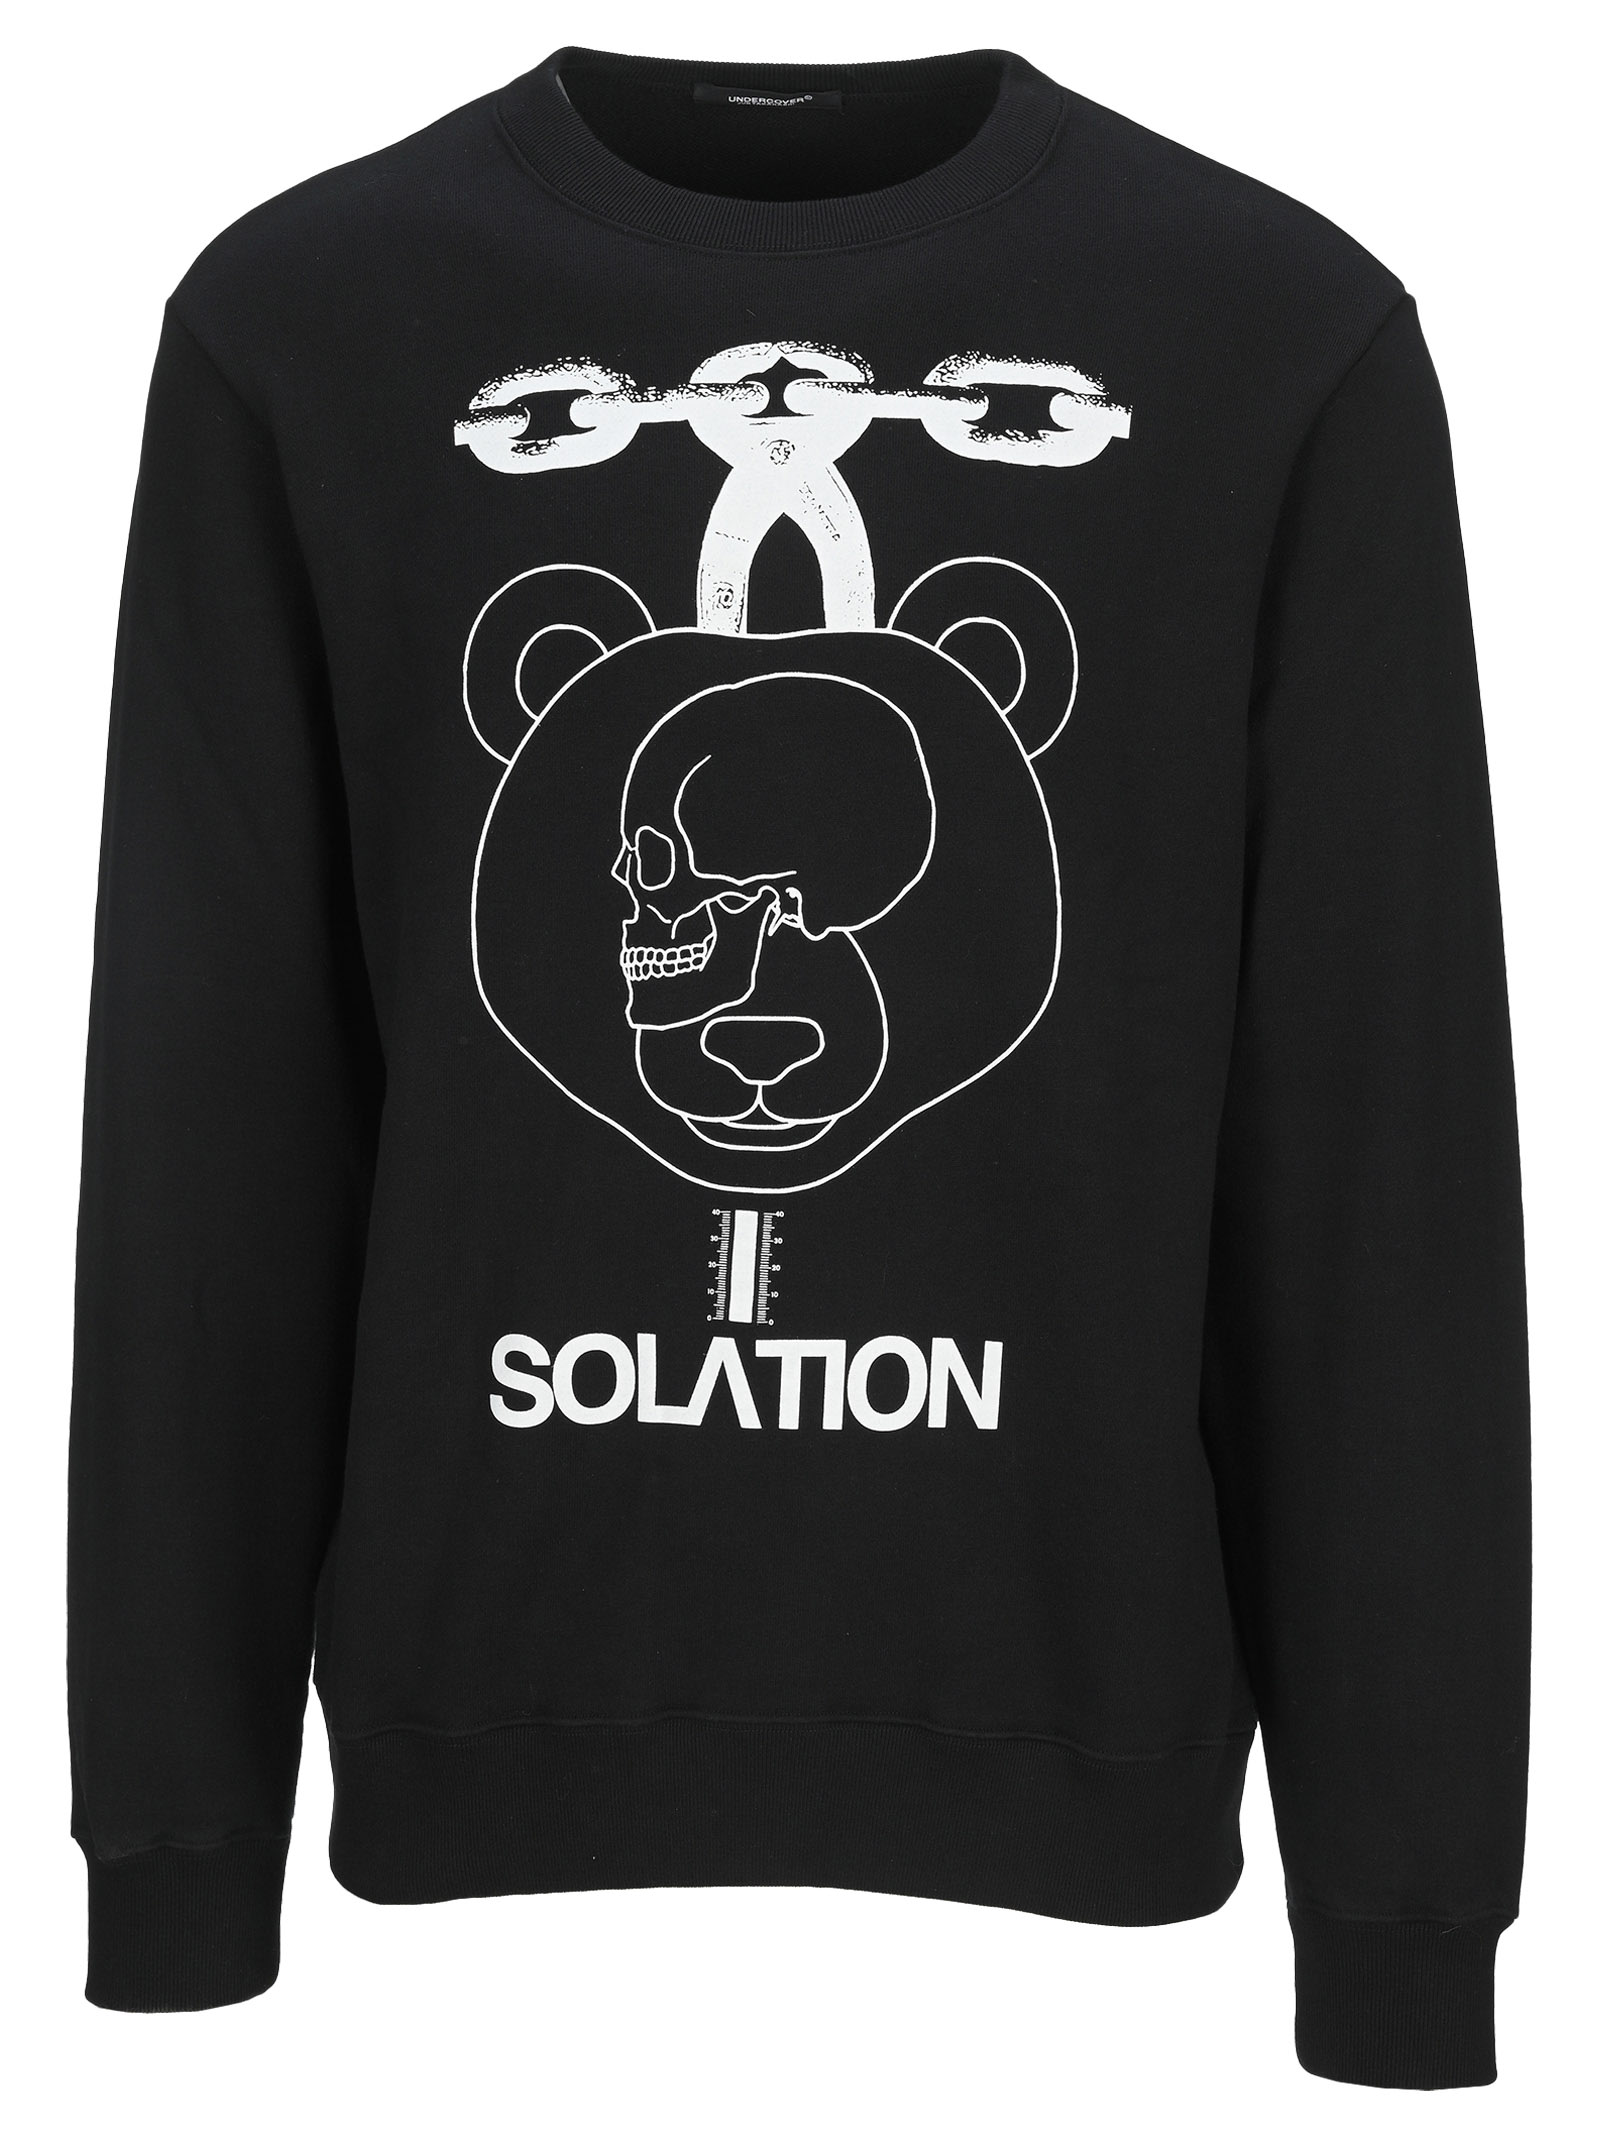 Undercover Jun Takahashi Undercover Solation Graphic Print Sweatshirt